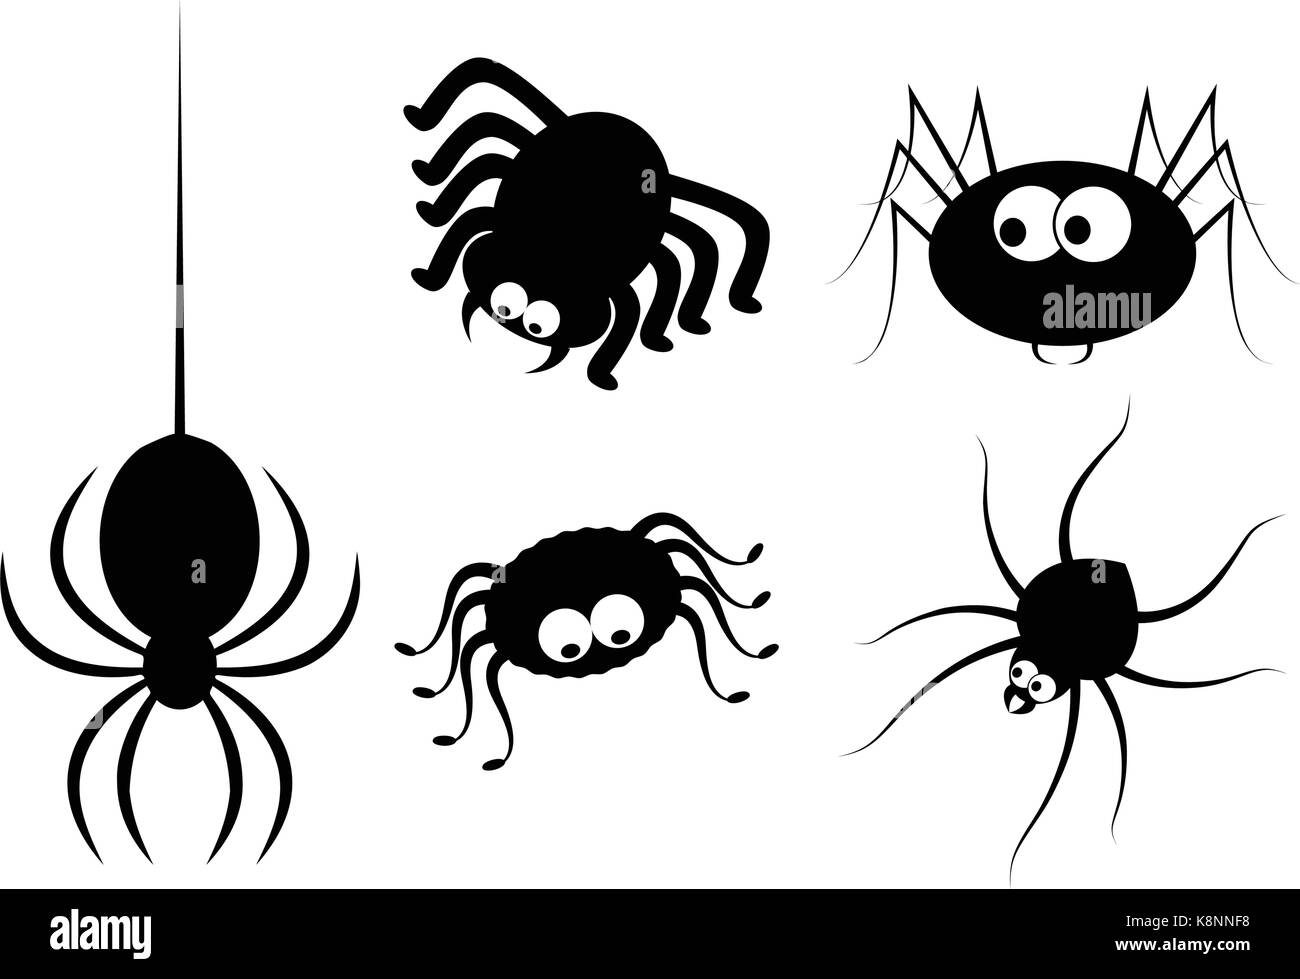 Araña de halloween Imágenes vectoriales de stock - Alamy